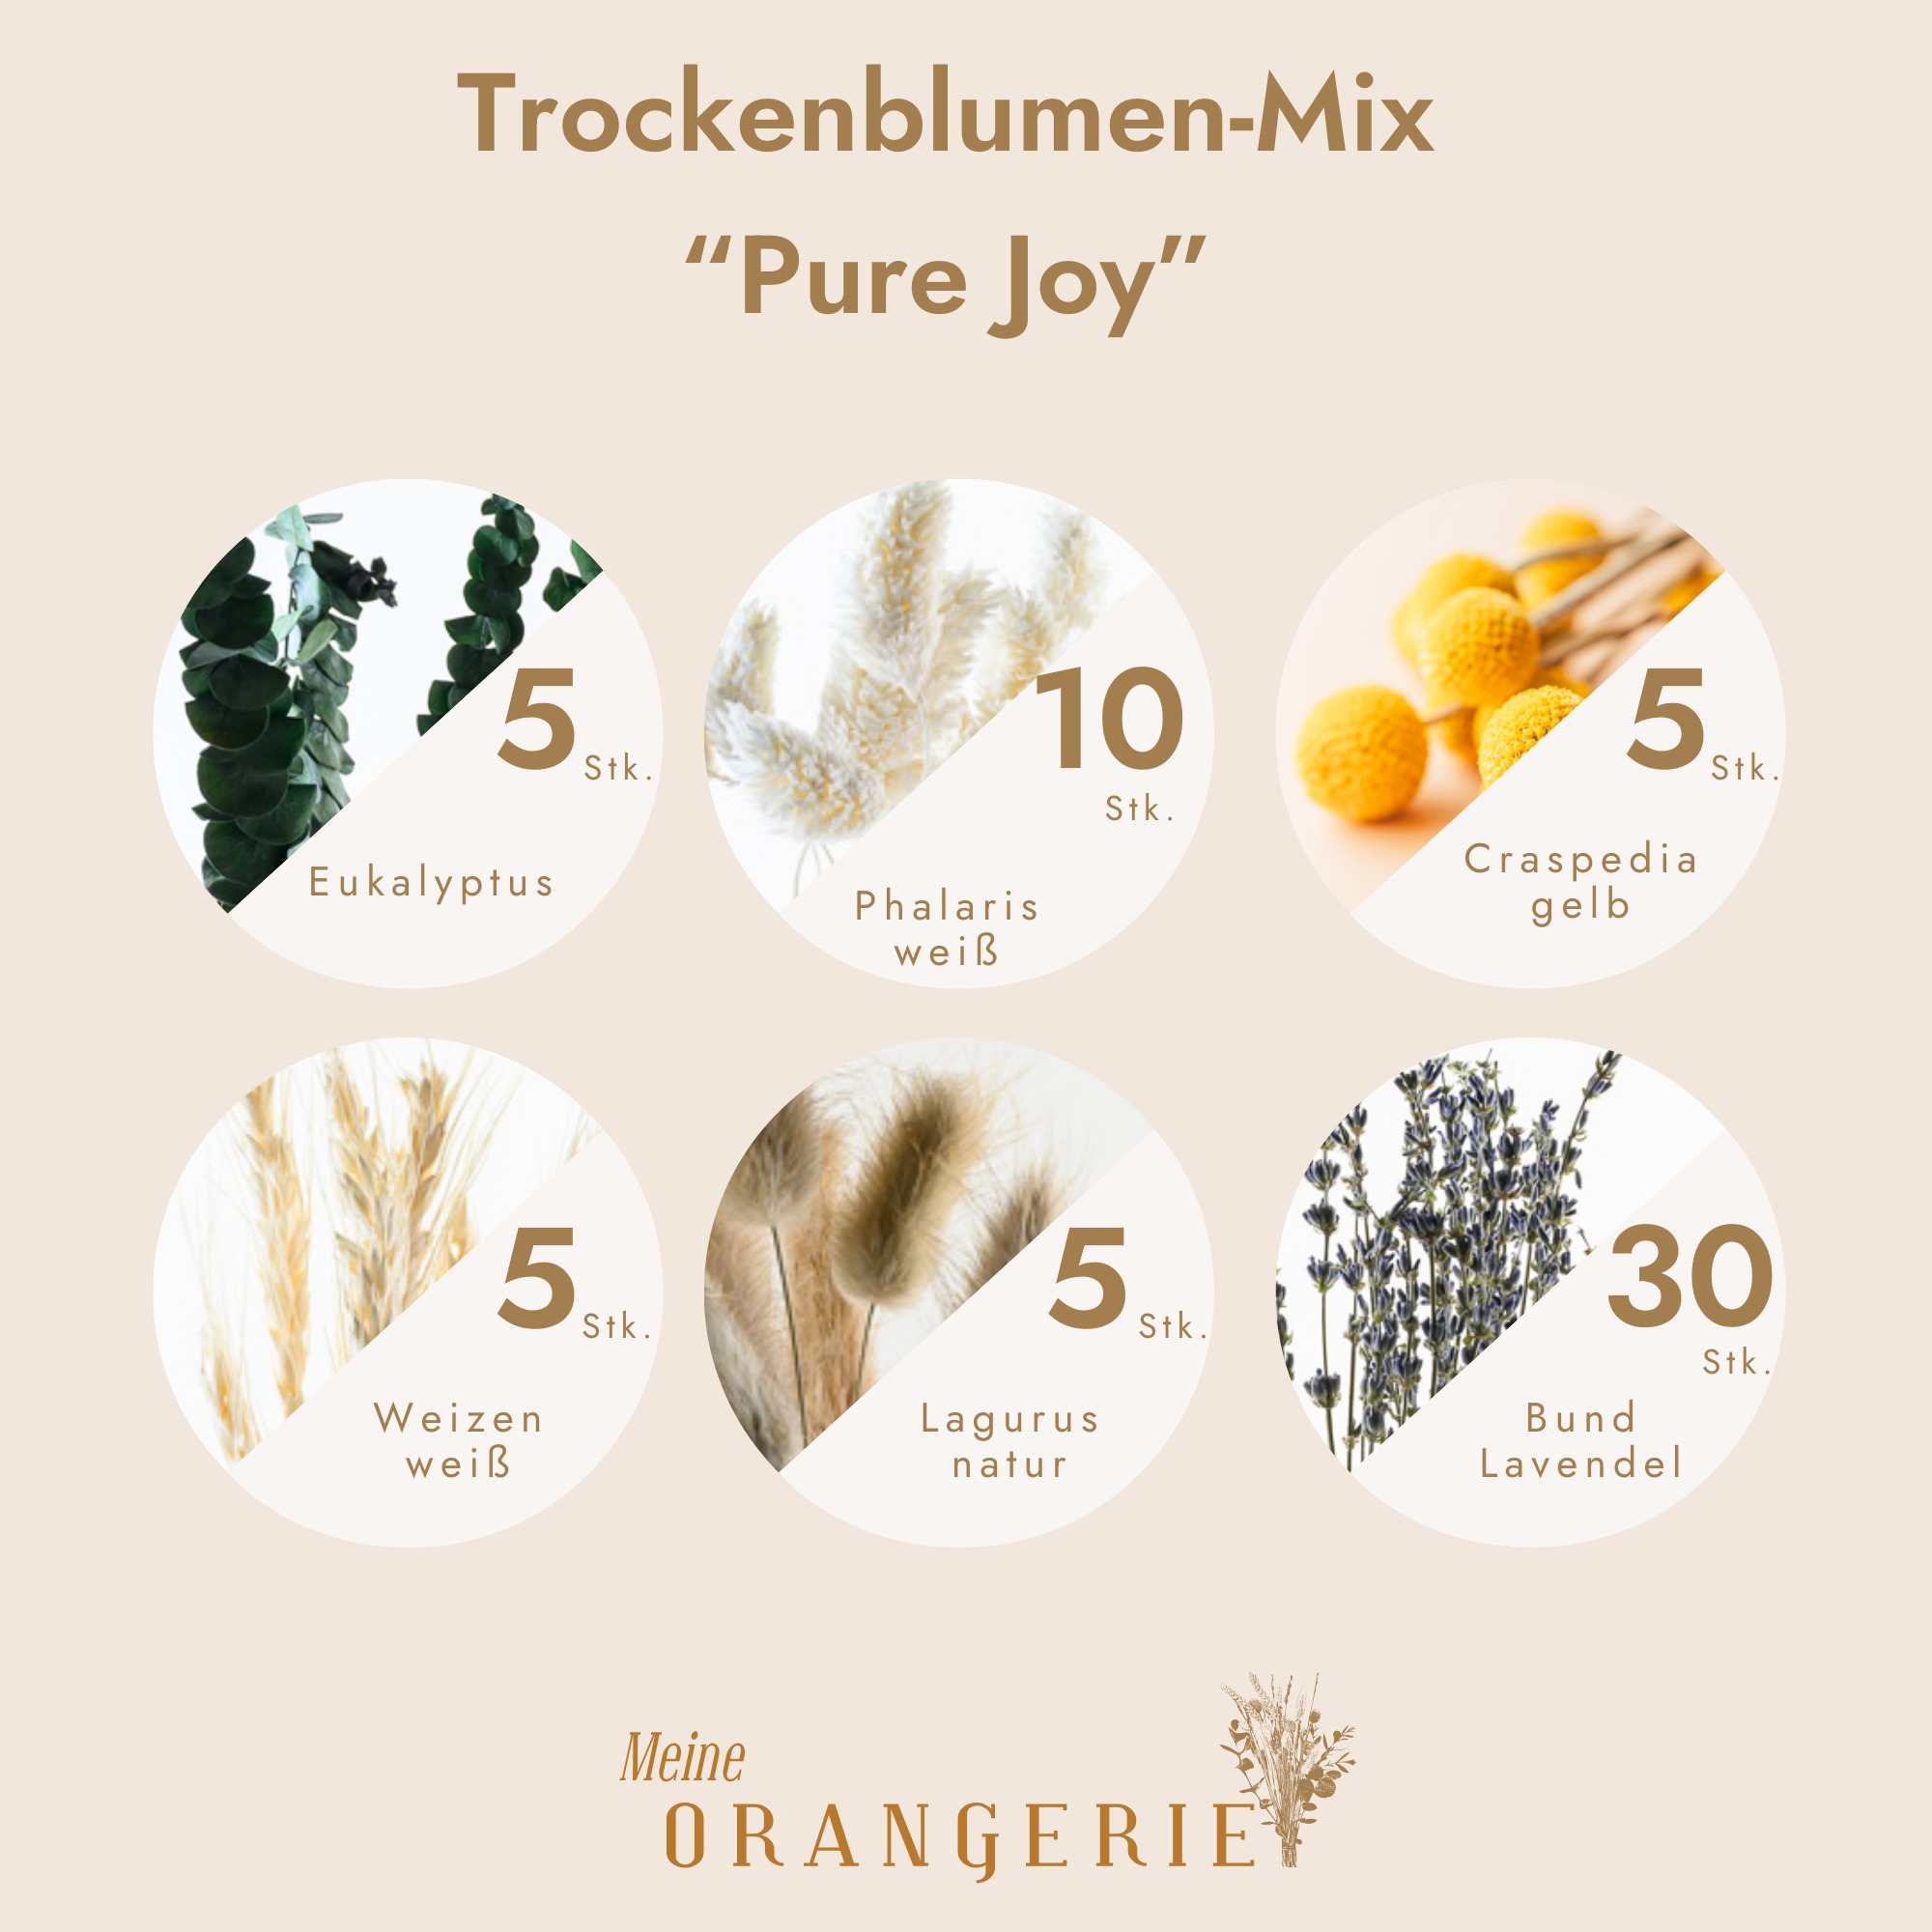 Trockenblumen-Mix "Pure Joy"